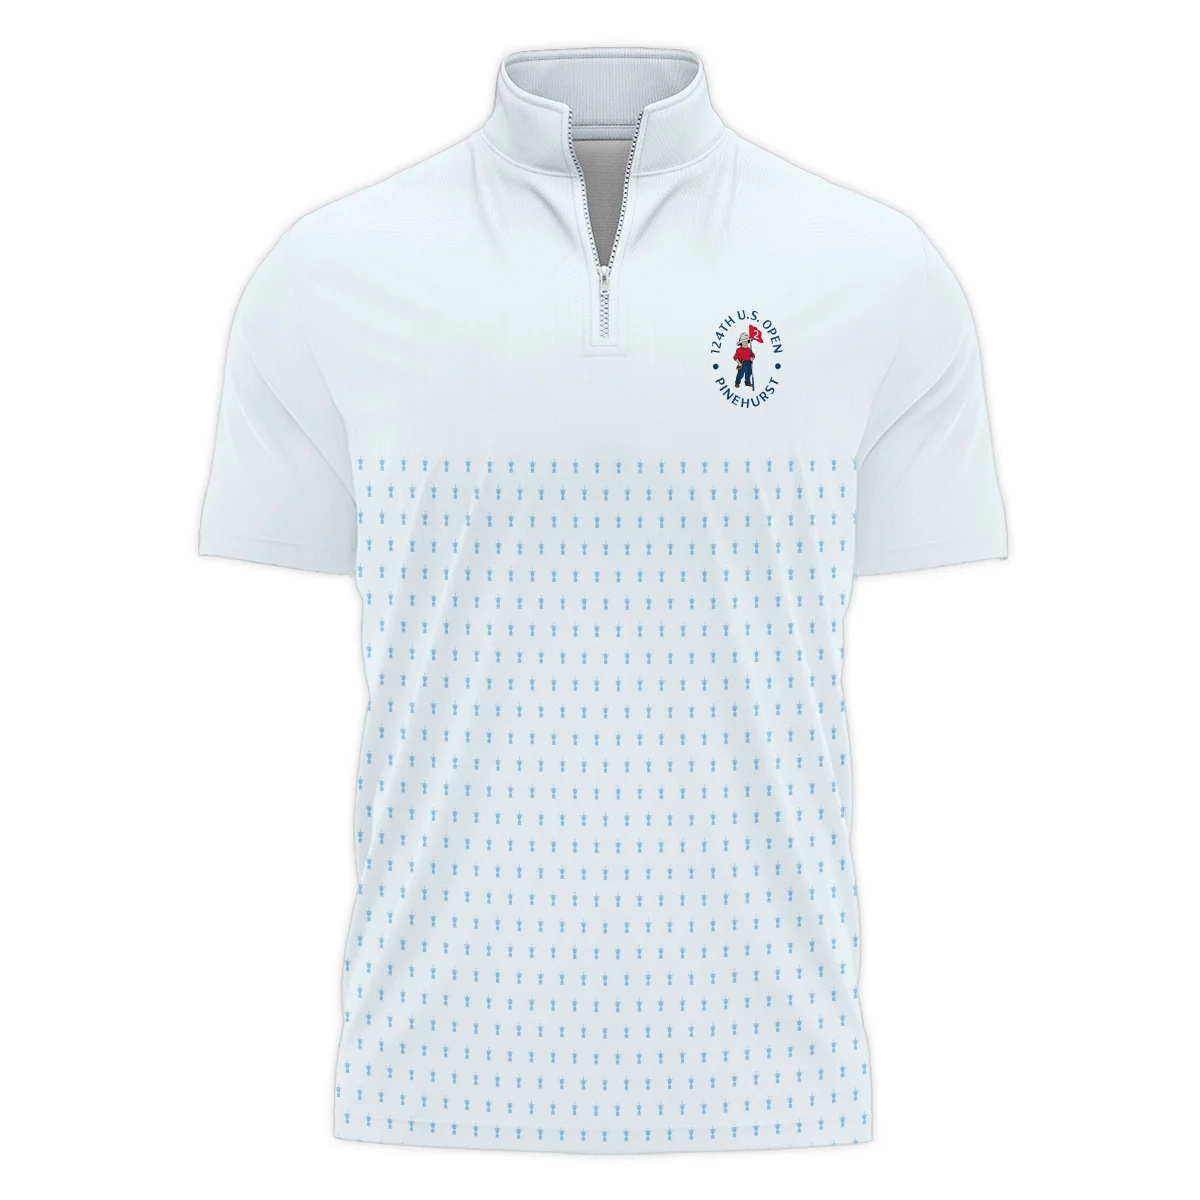 U.S Open Trophy Pattern Light Blue 124th U.S. Open Pinehurst Rolex Polo Shirt Mandarin Collar Polo Shirt